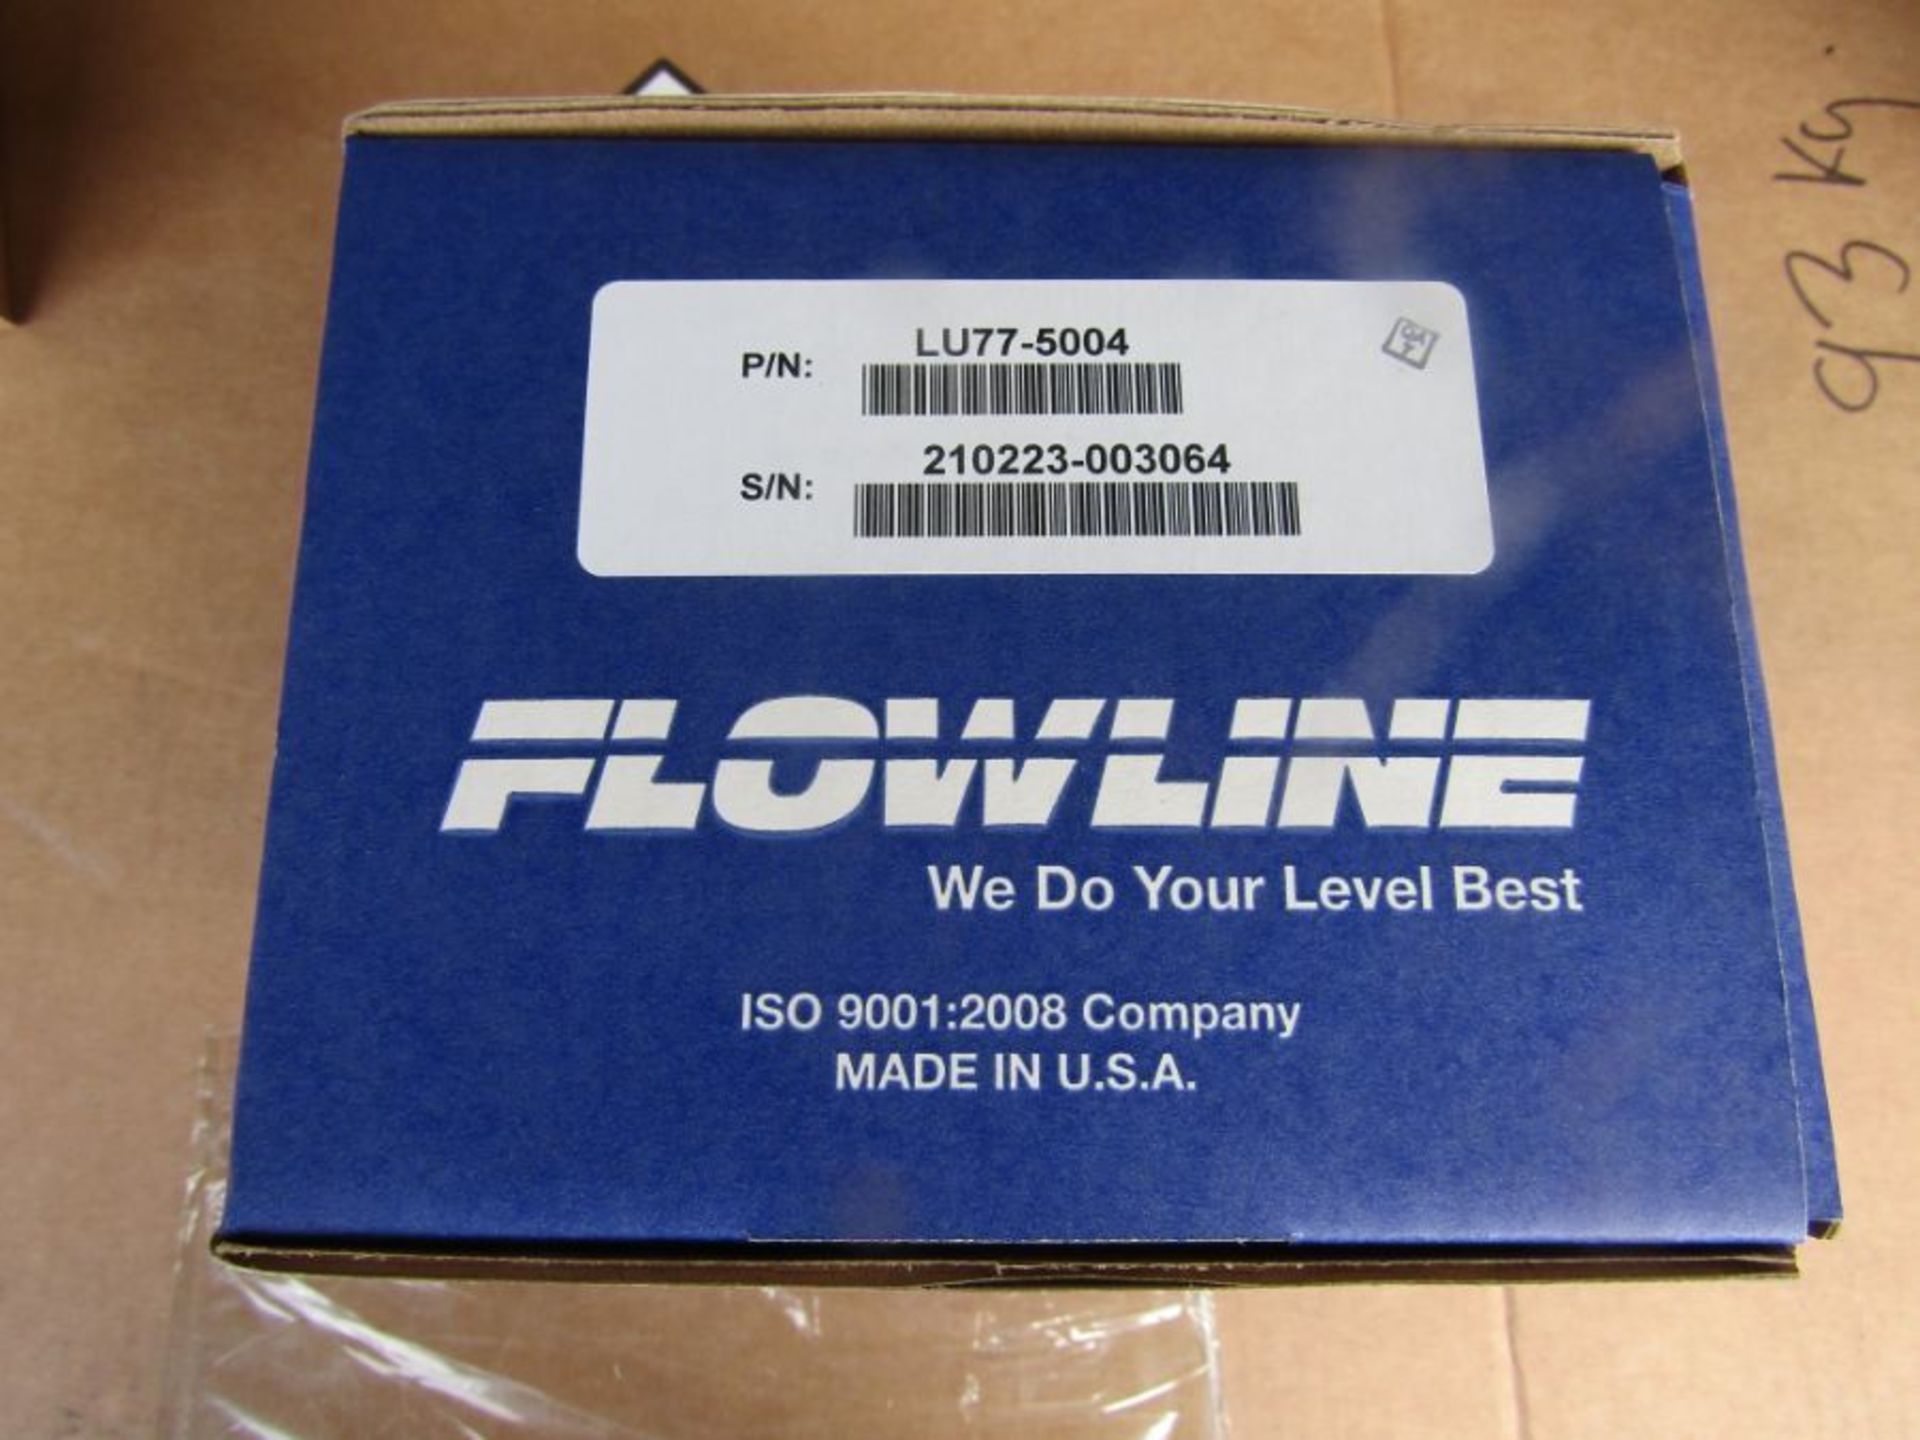 Flowline EchoSwitch Ultrasonic Level Switch Sensor, Vertical LU77-5004 TM 1240130 - Image 2 of 6